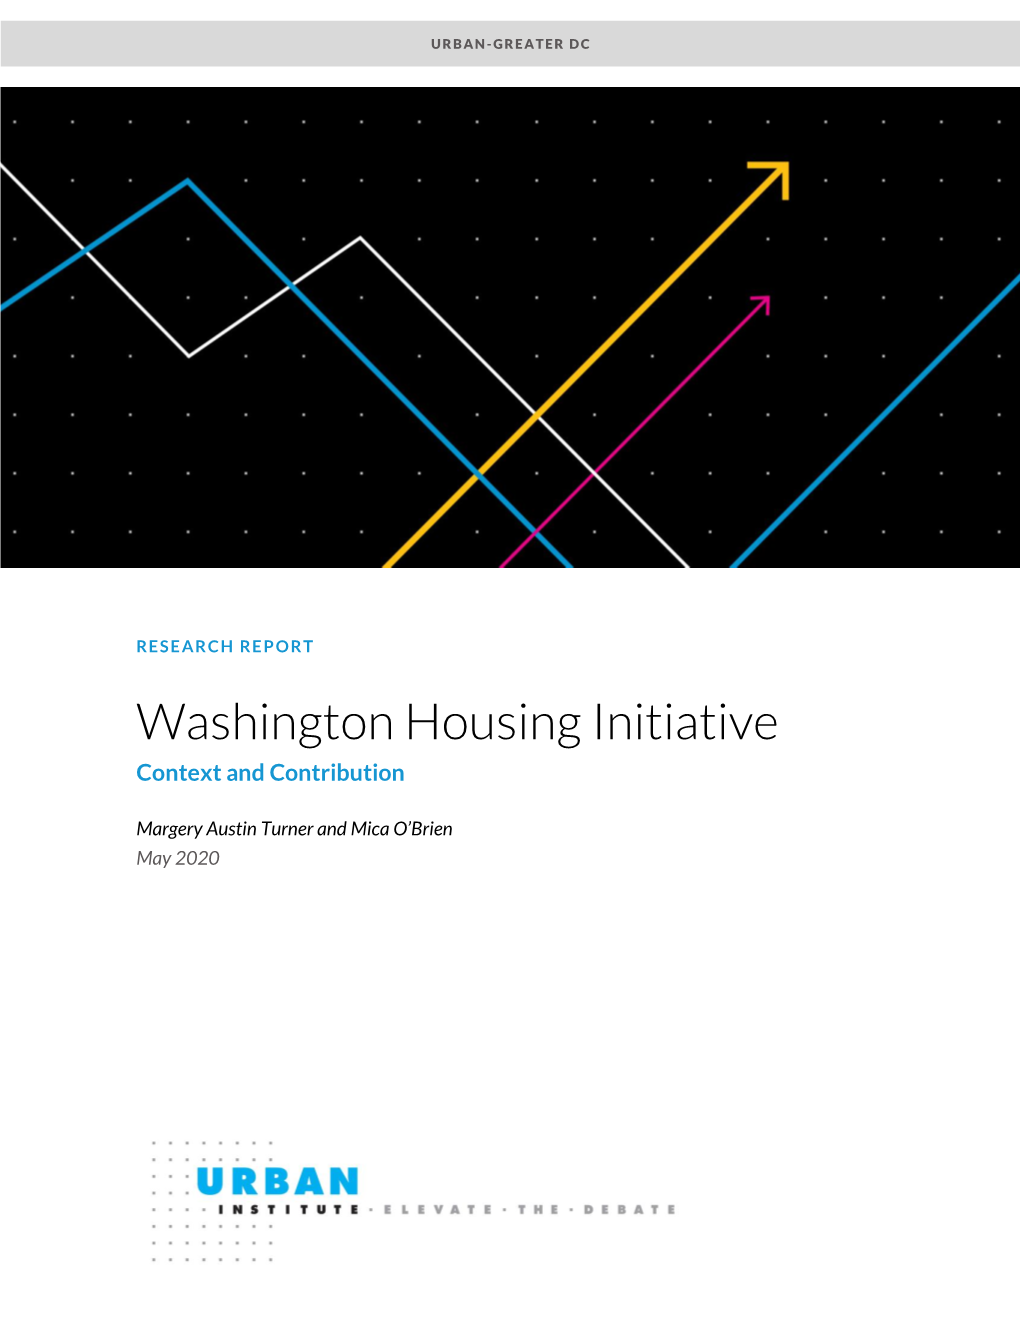 Washington Housing Initiative: Context and Contribution